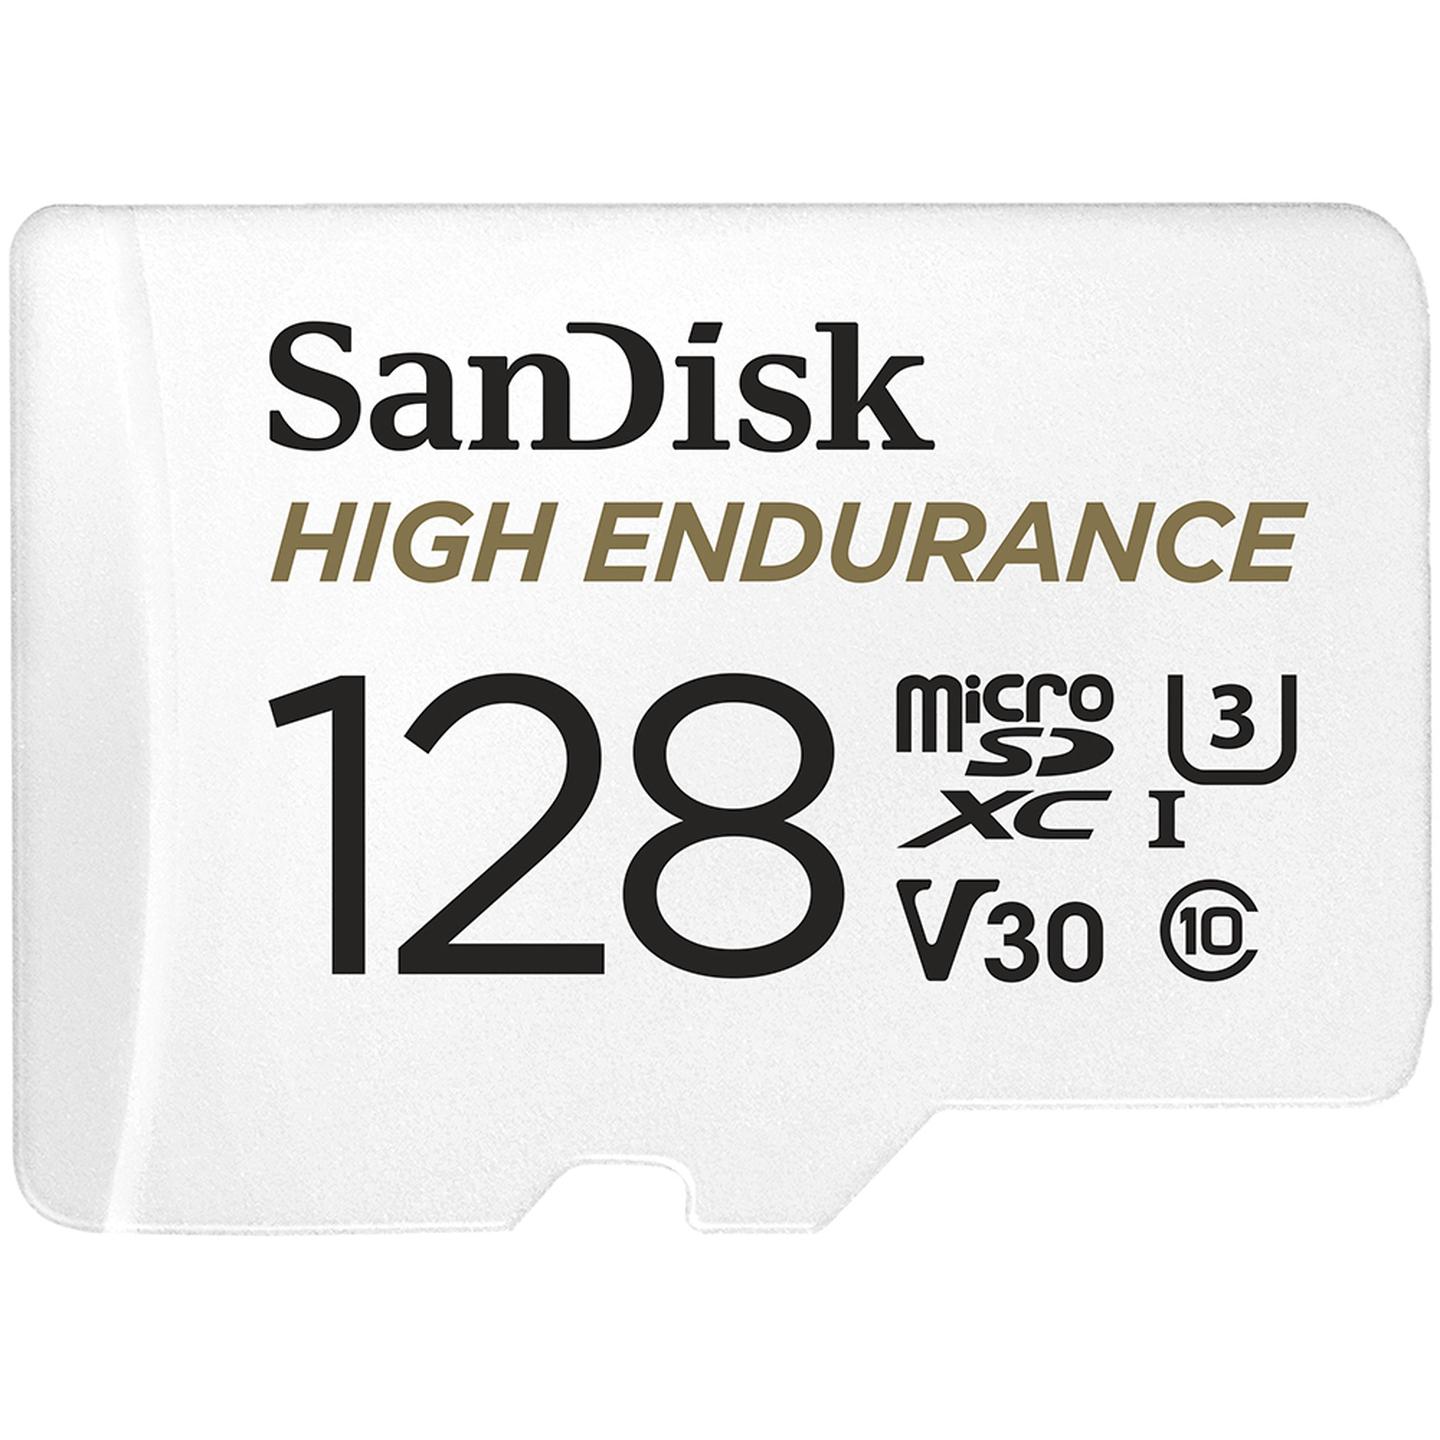 Sandisk 128GB High Endurance microSDXC Class 10 Reads 100MB/S Writes 40MB/S 